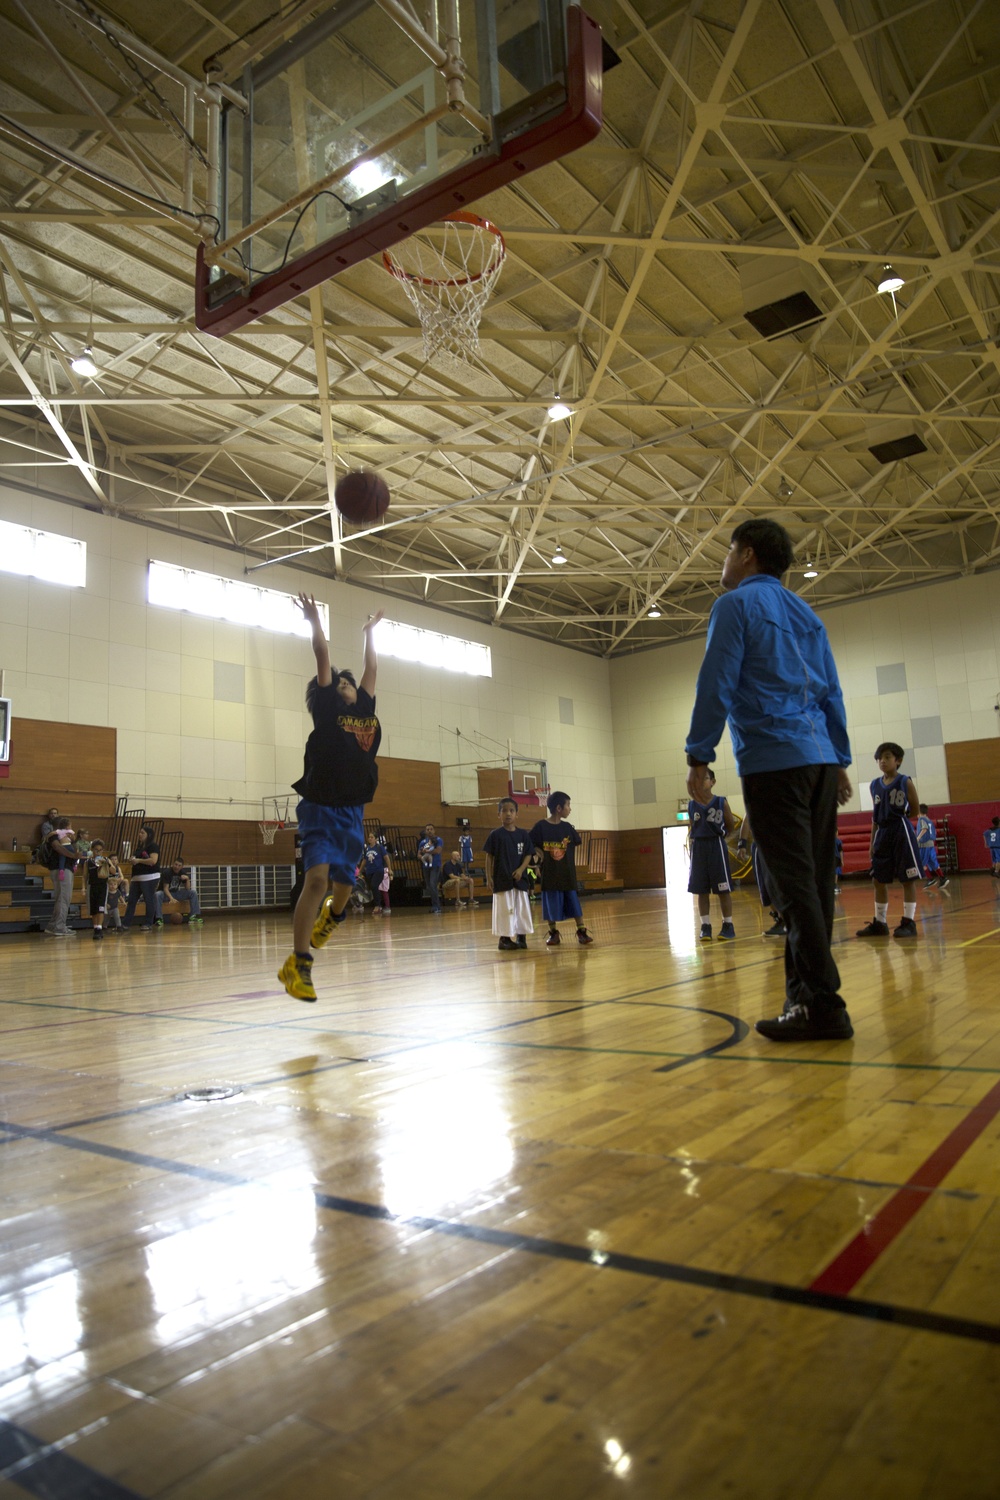 Hamagawa Elementary School students, SOFA children gather for basketball game